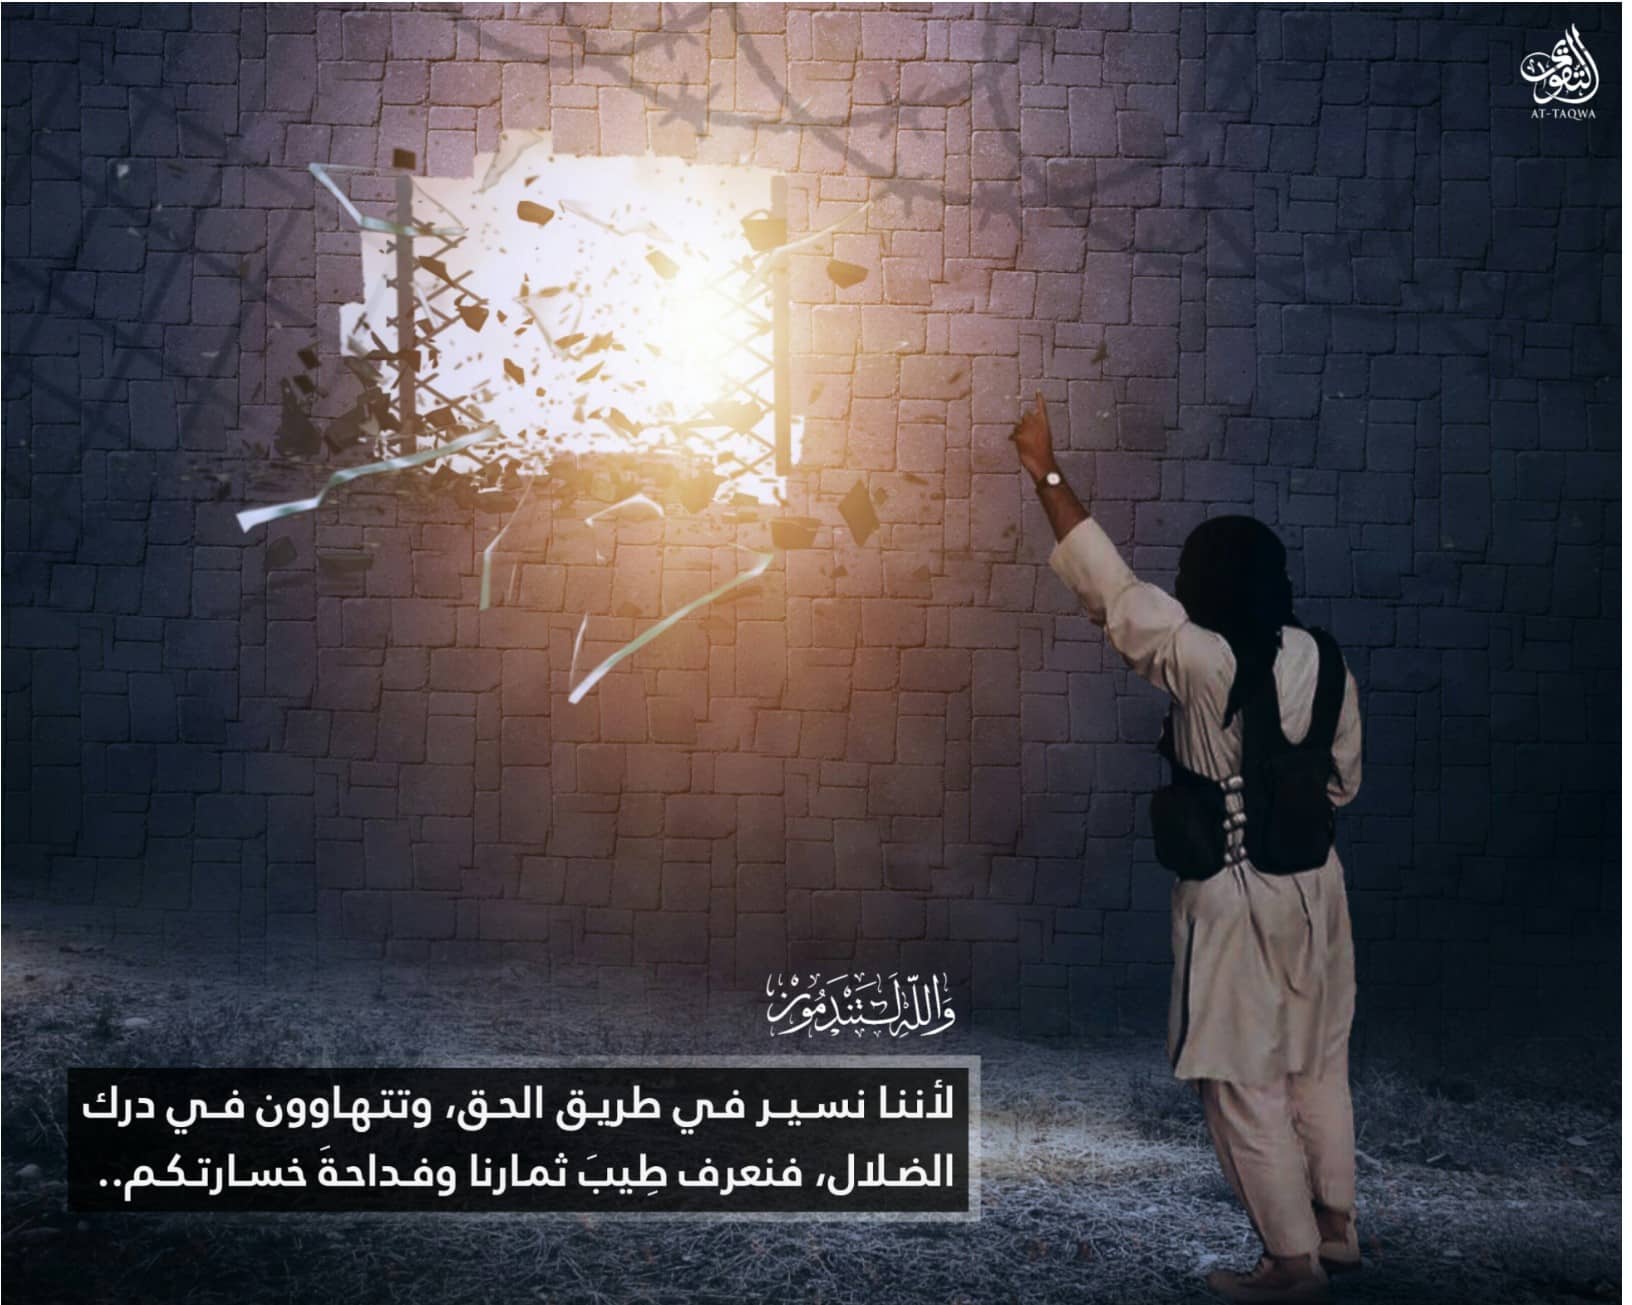 (Poster) al-Taqwa Media (Unofficial Islamic State): "We Swear You'll Regret It"- 4 March 2022